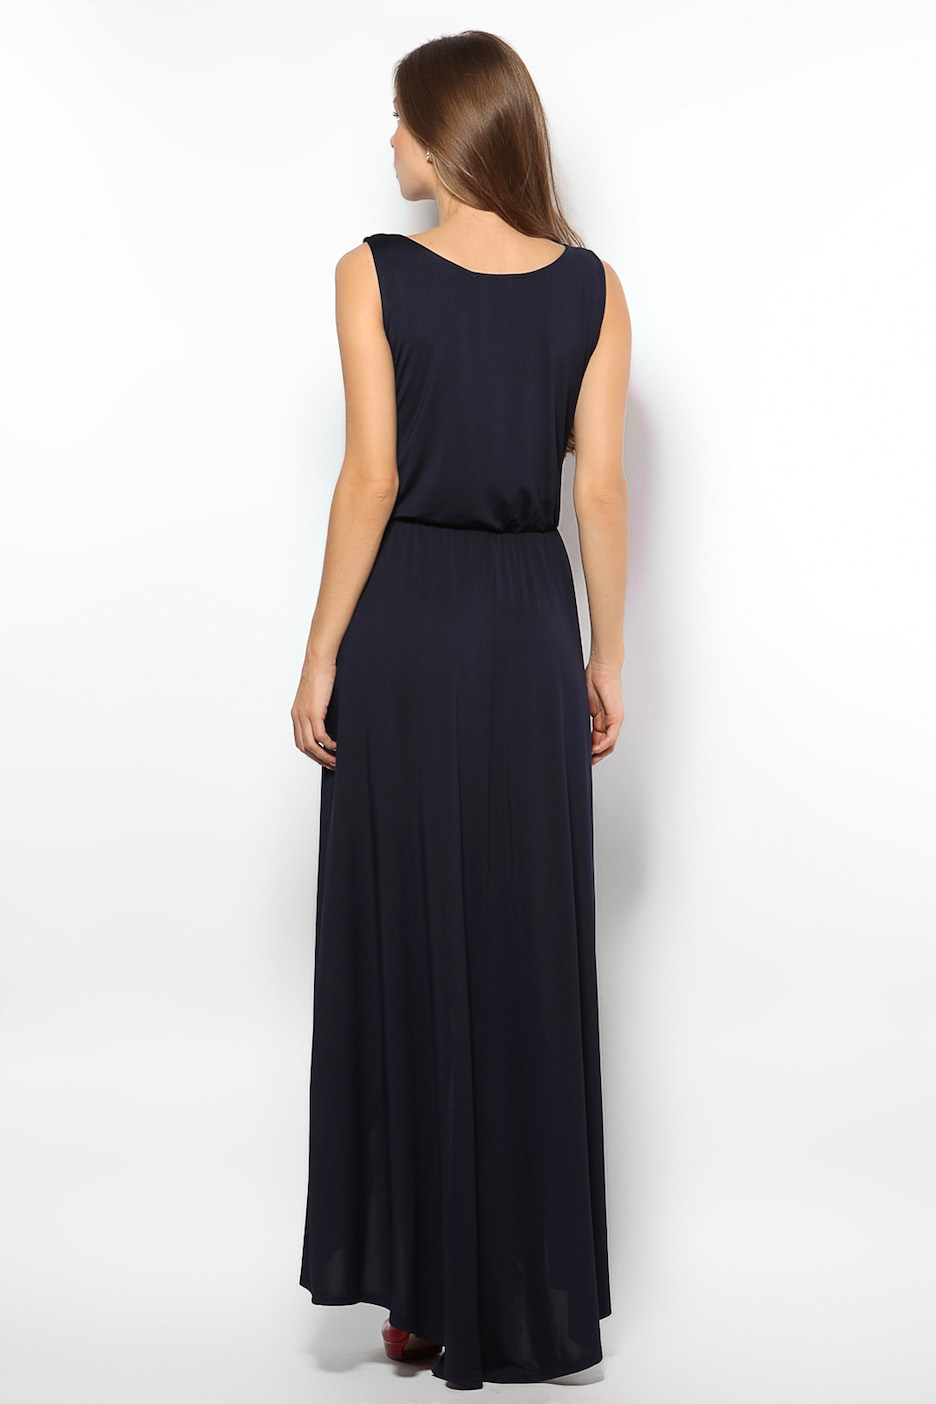 Фото товара 9614, темно-синее вечернее платье